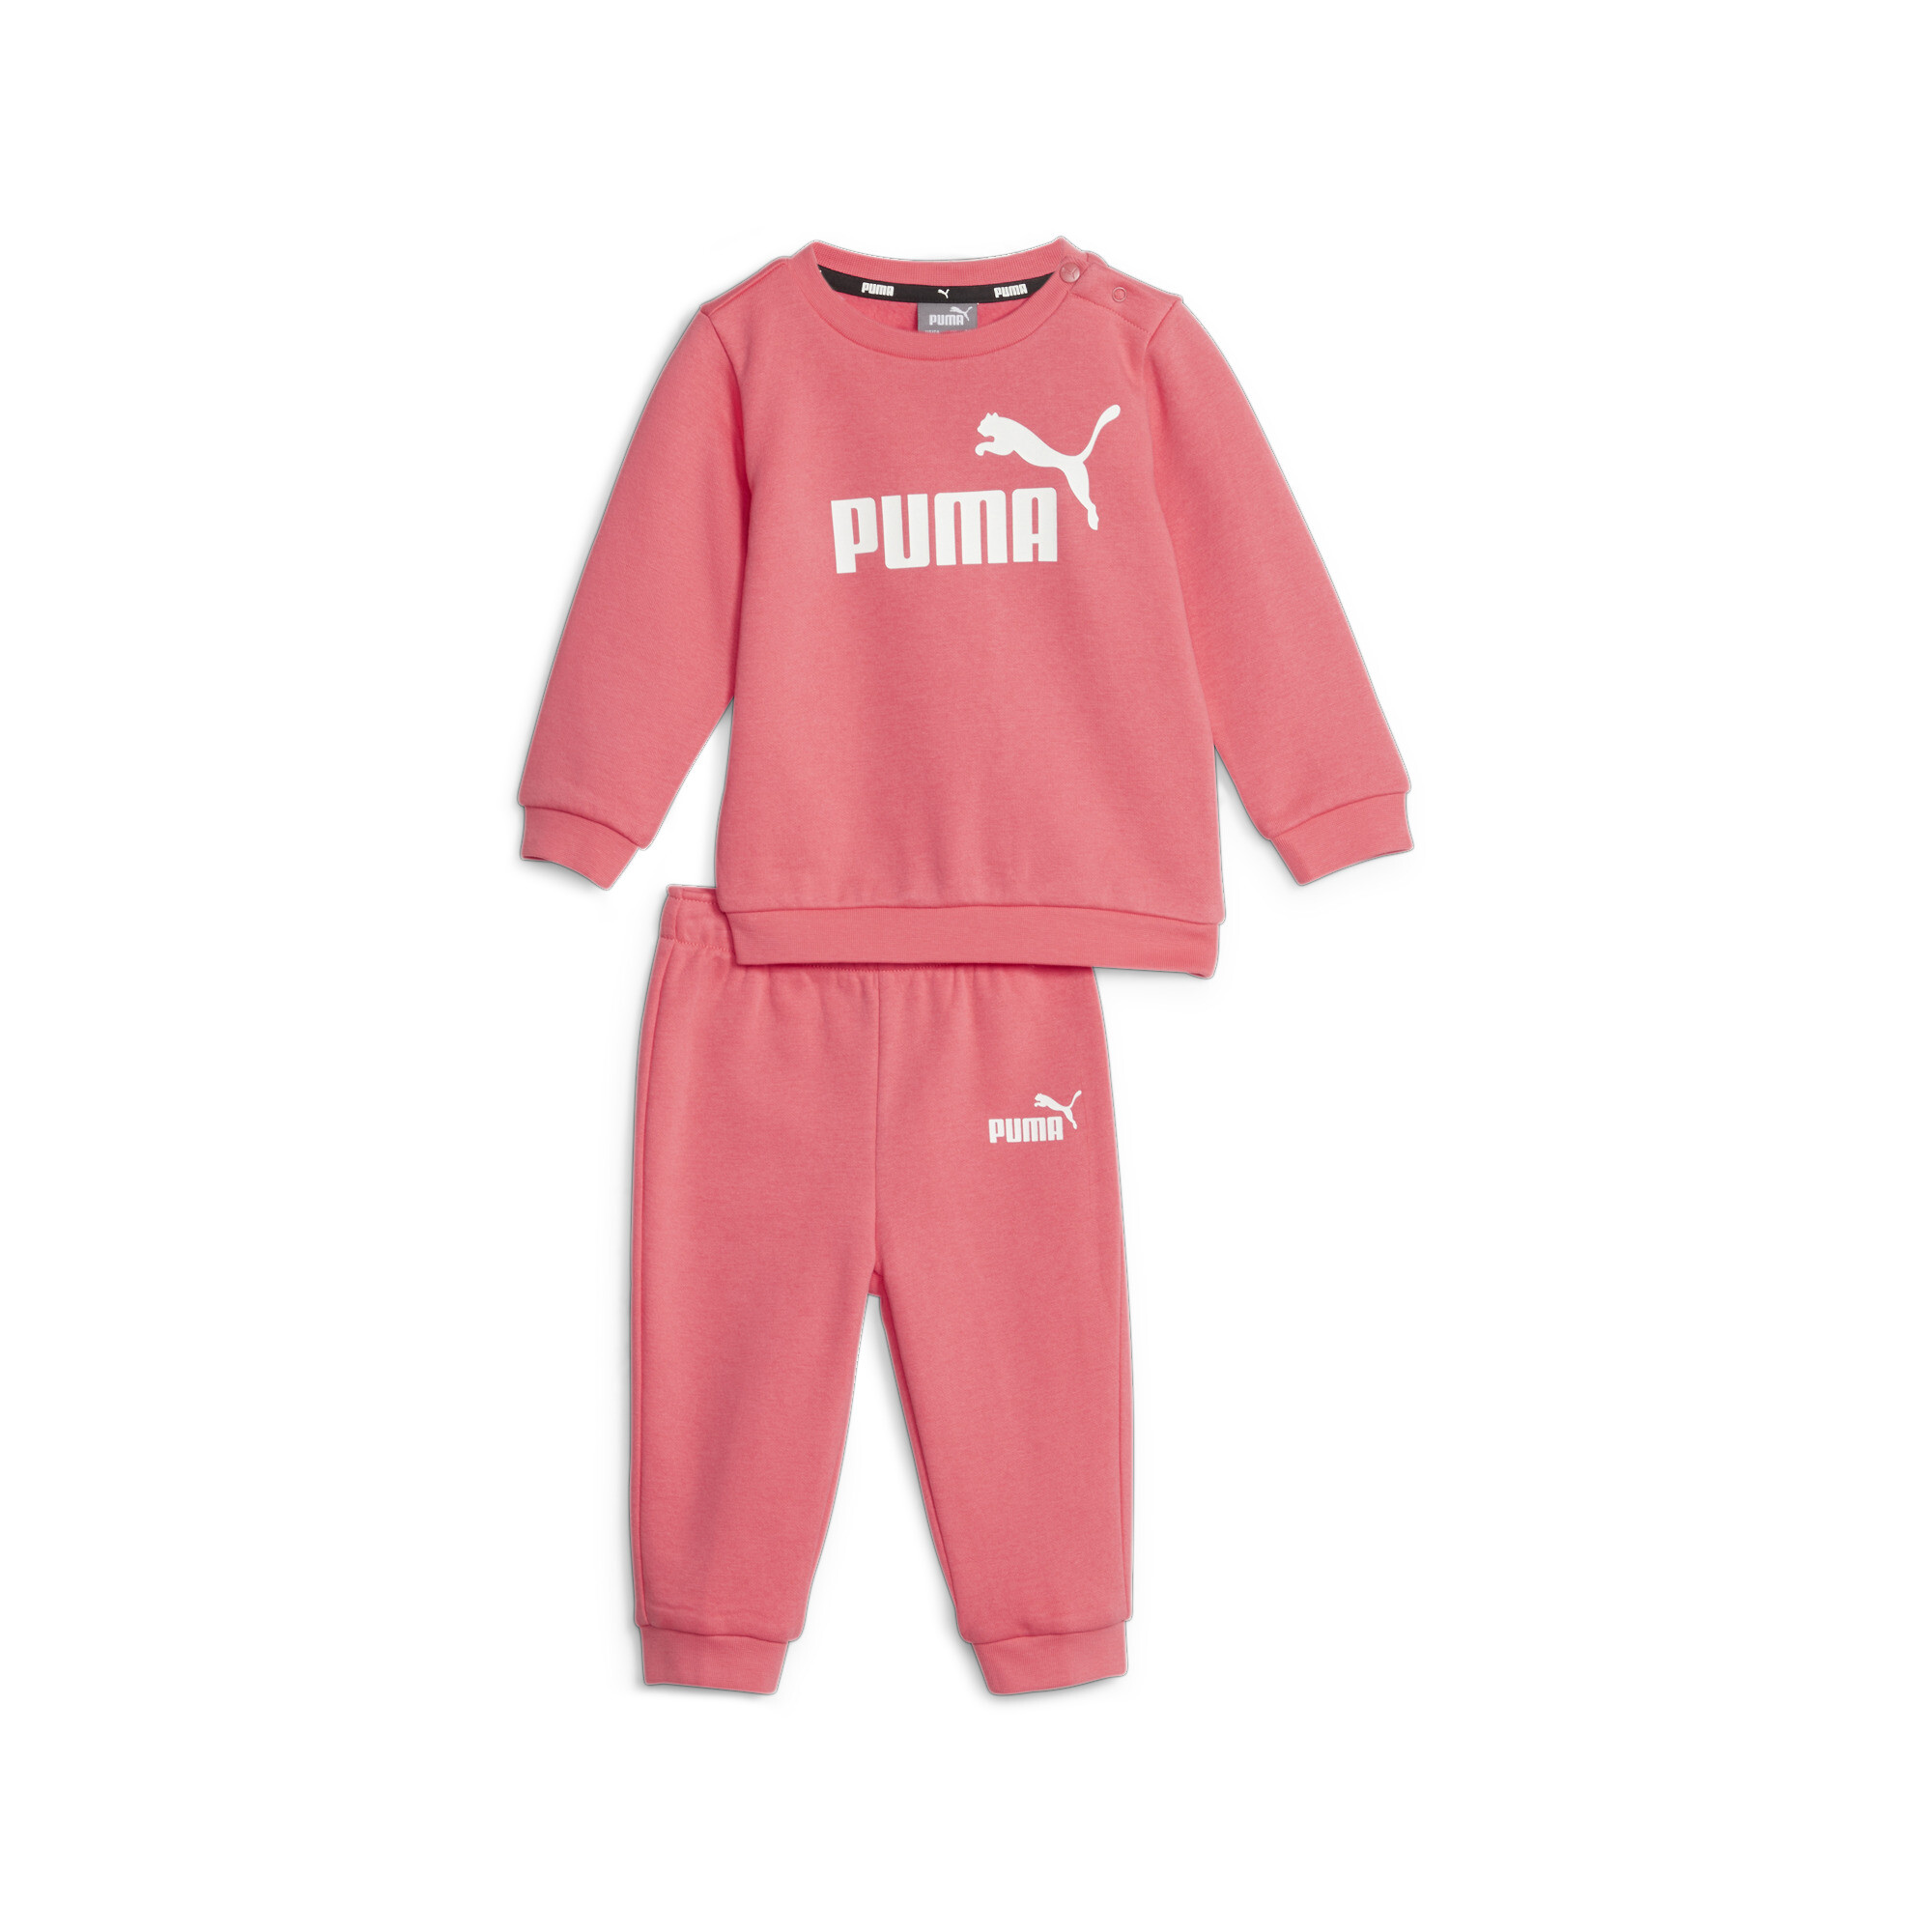 PUMA Essentials Minicats Crew Neck Babies' Jogger Suit In Pink, Size 12-18 Months